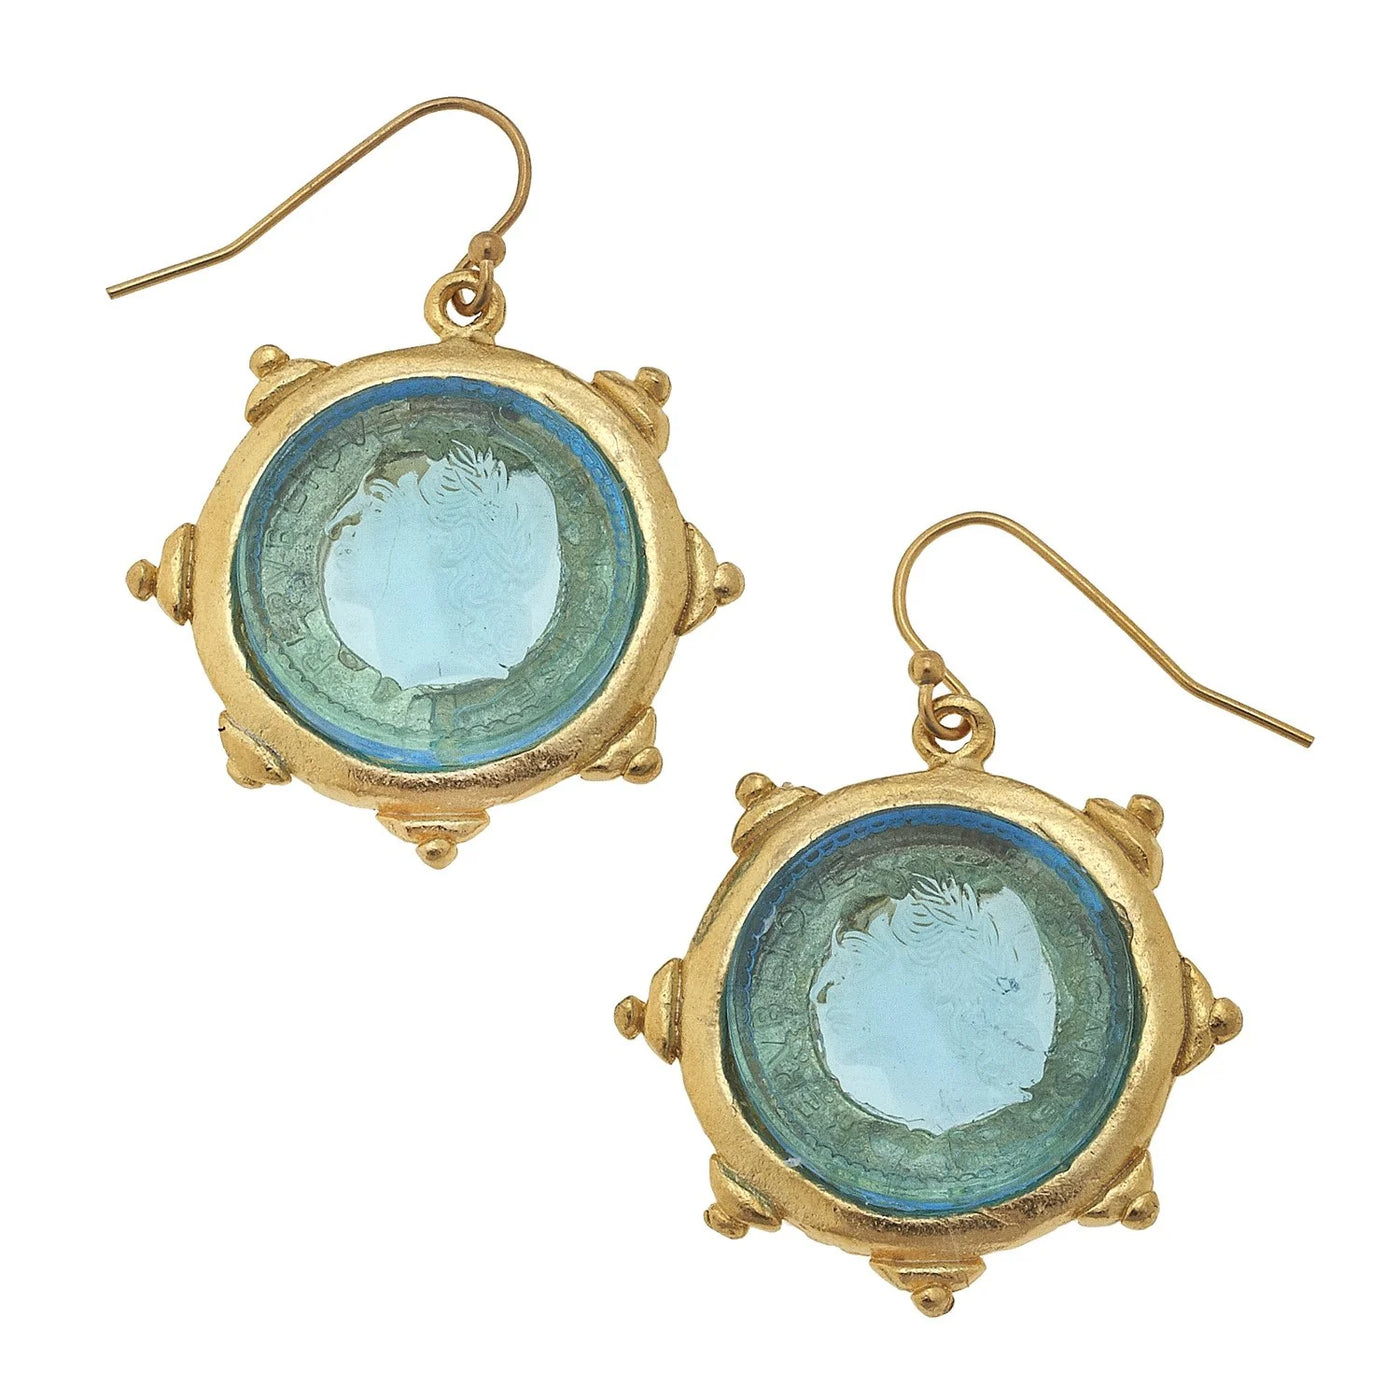 Venetian Glass Coin Earrings